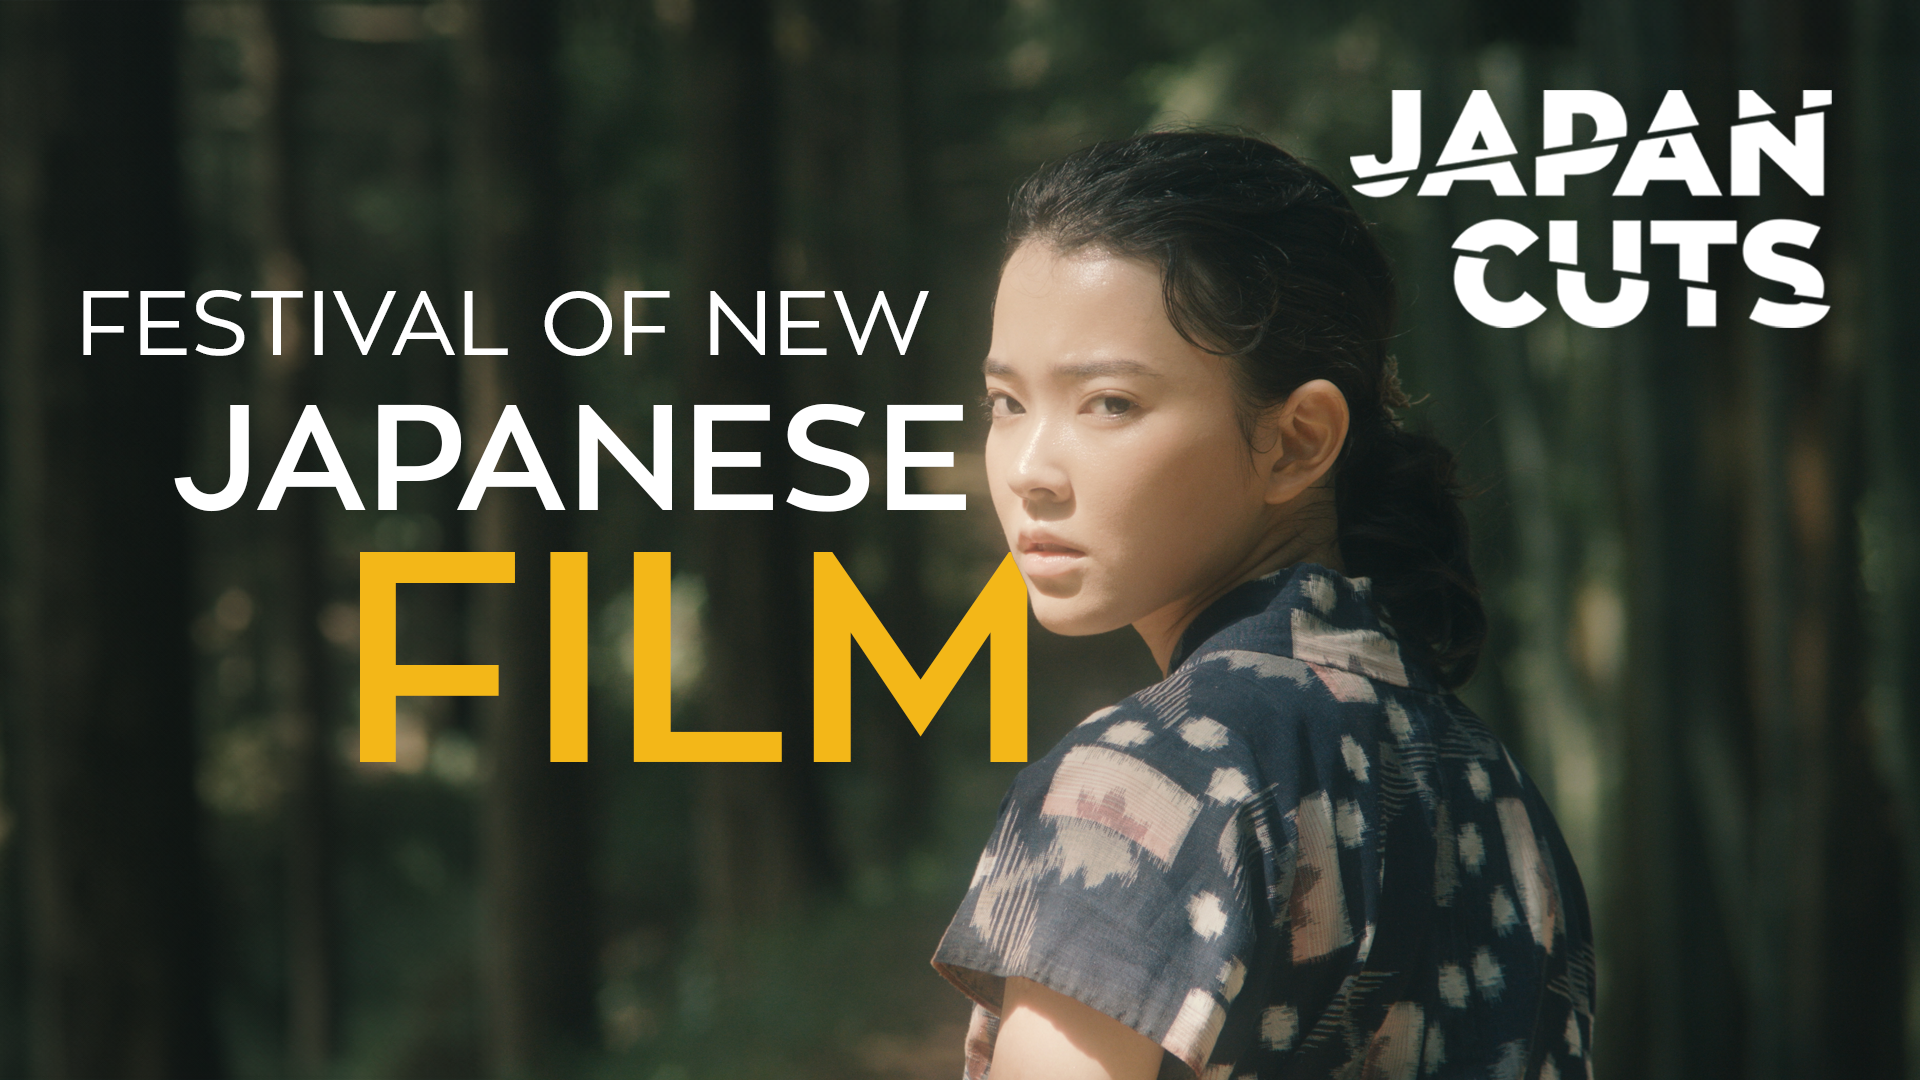 JAPAN CUTS Film Festival Returns to Japan Society — JapanCultureNYC